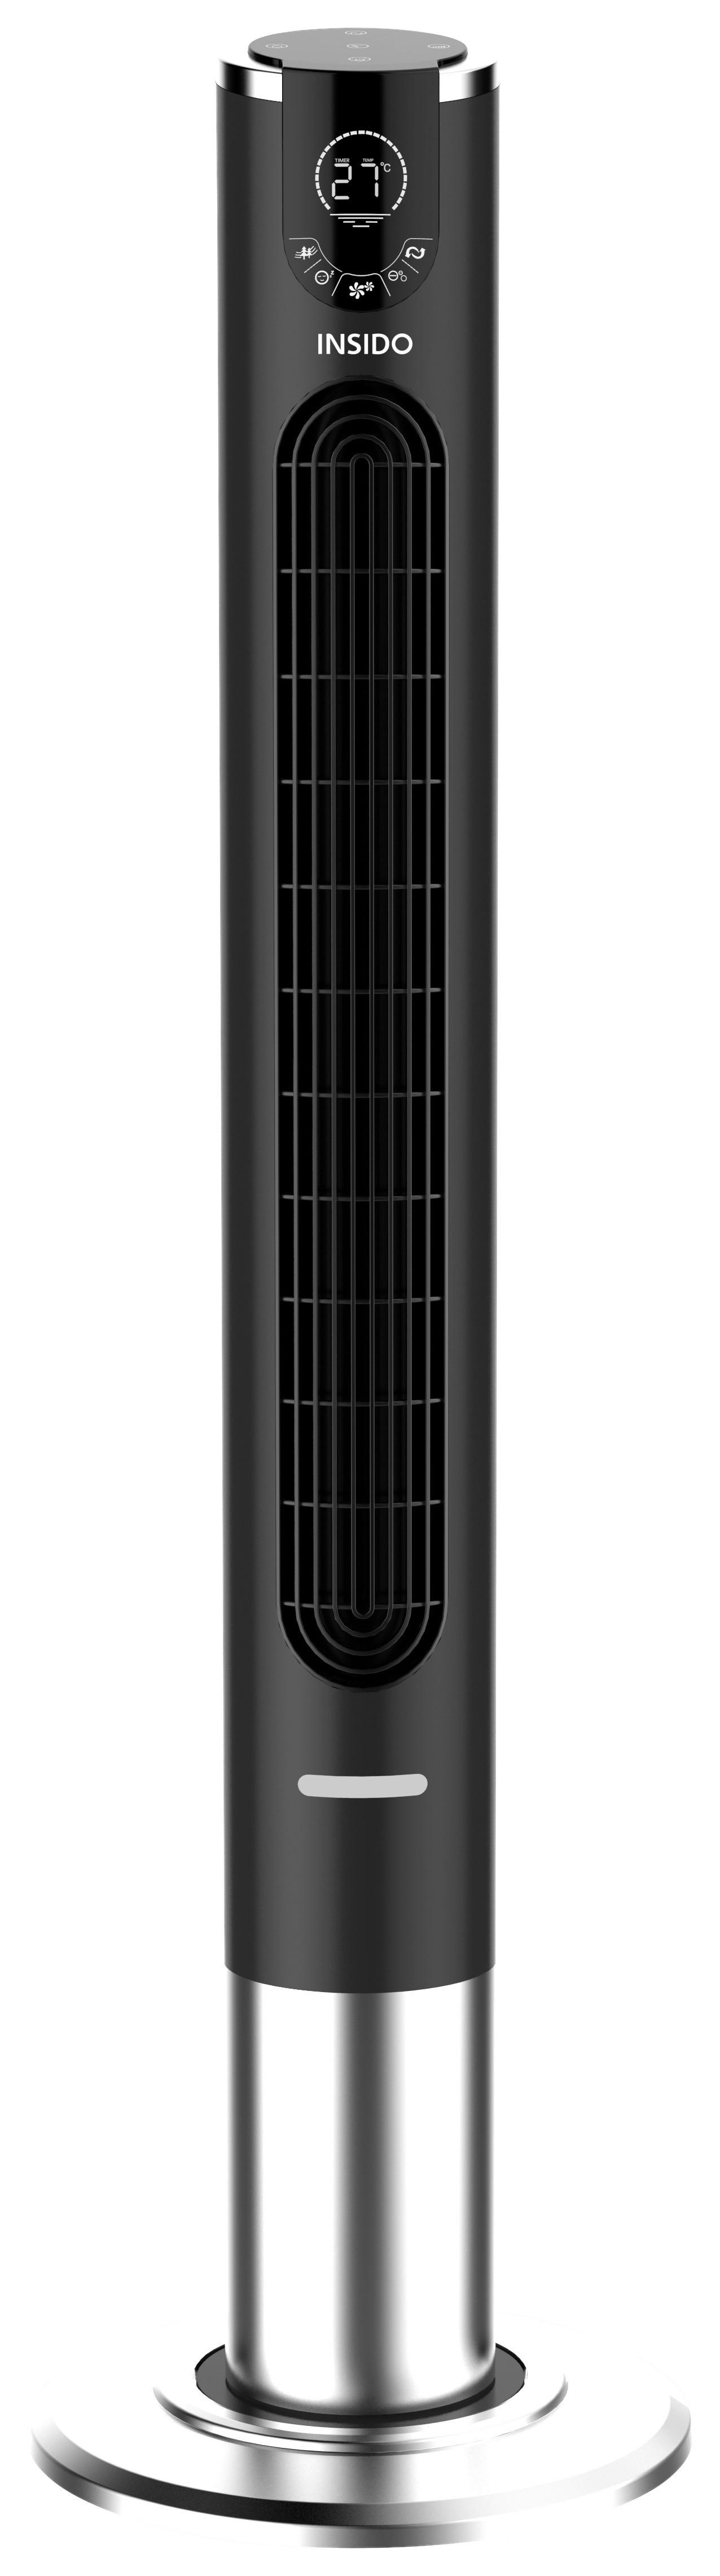 Turmventilator max. 50 Watt. - Edelstahlfarben/Schwarz, MODERN, Kunststoff (32/114cm) - Insido